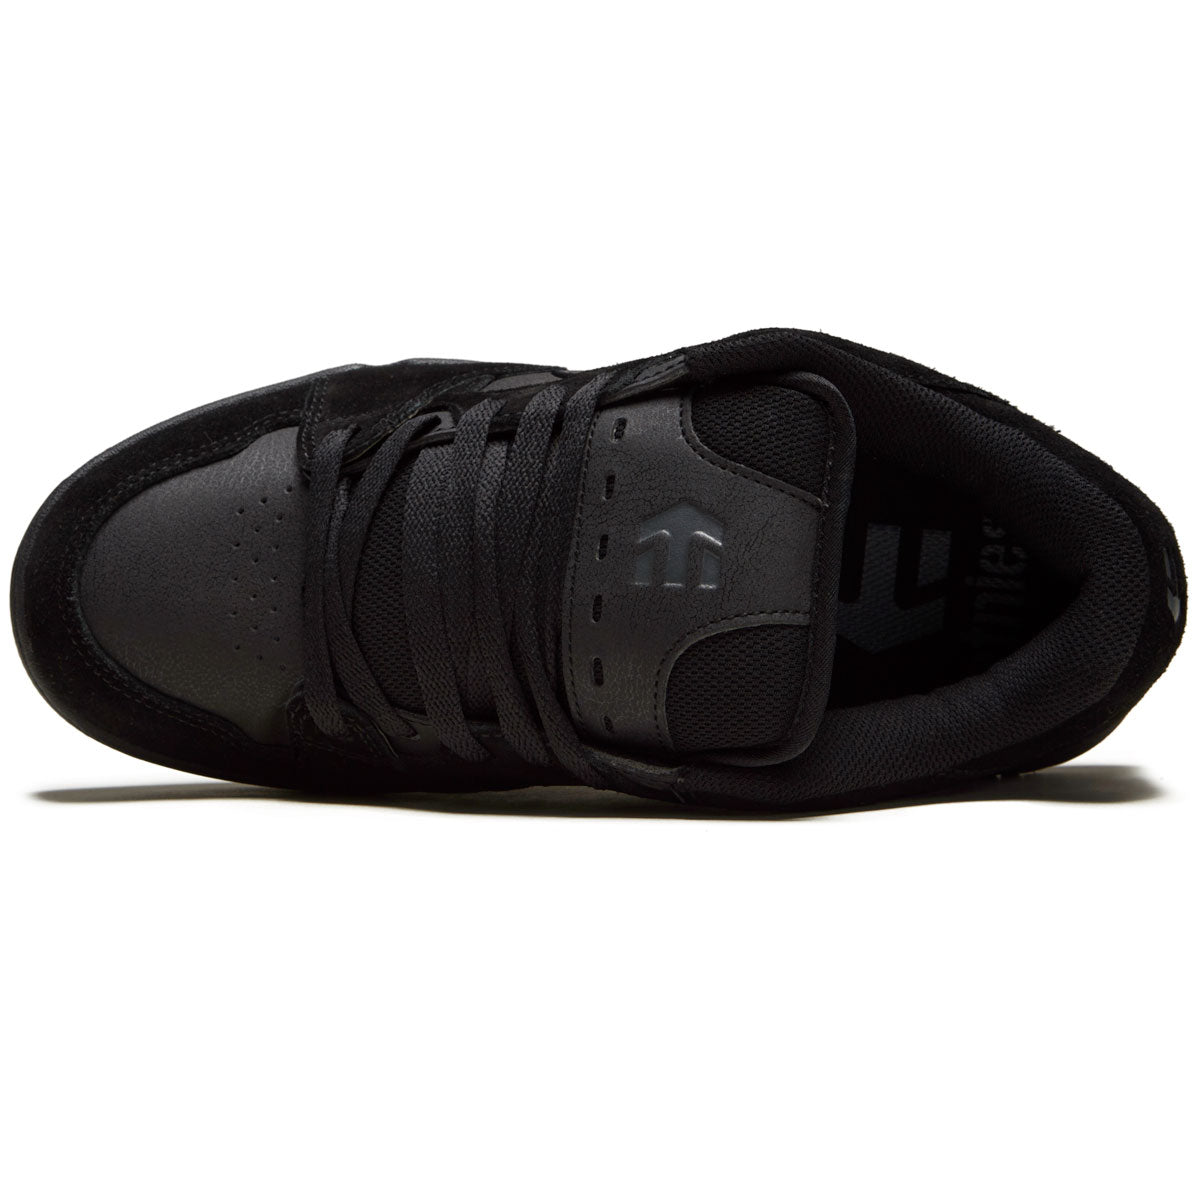 Etnies Faze Shoes - Black/Black/Gum image 3